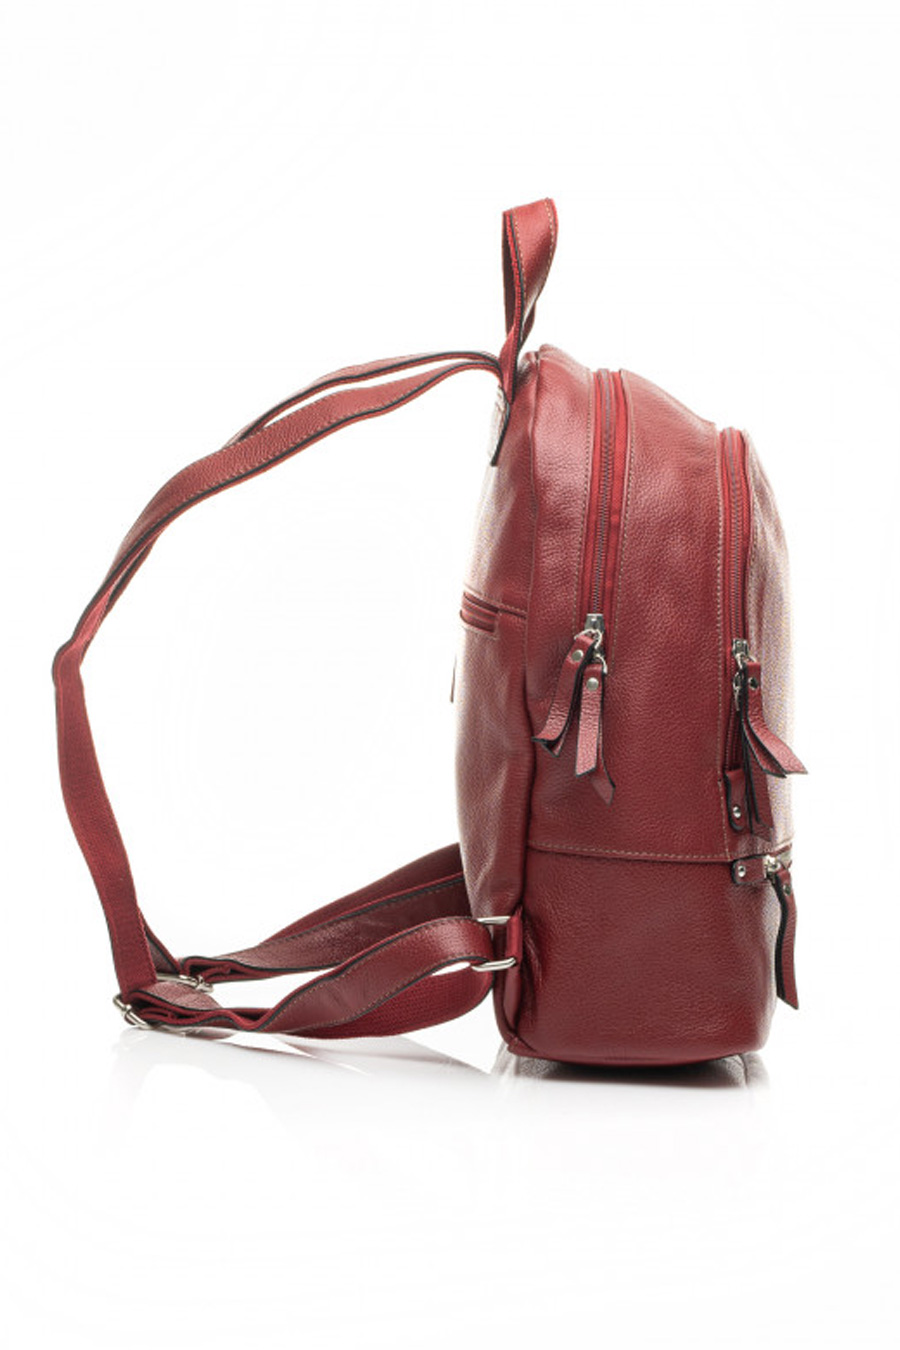 Backpack KATANA 69717-08